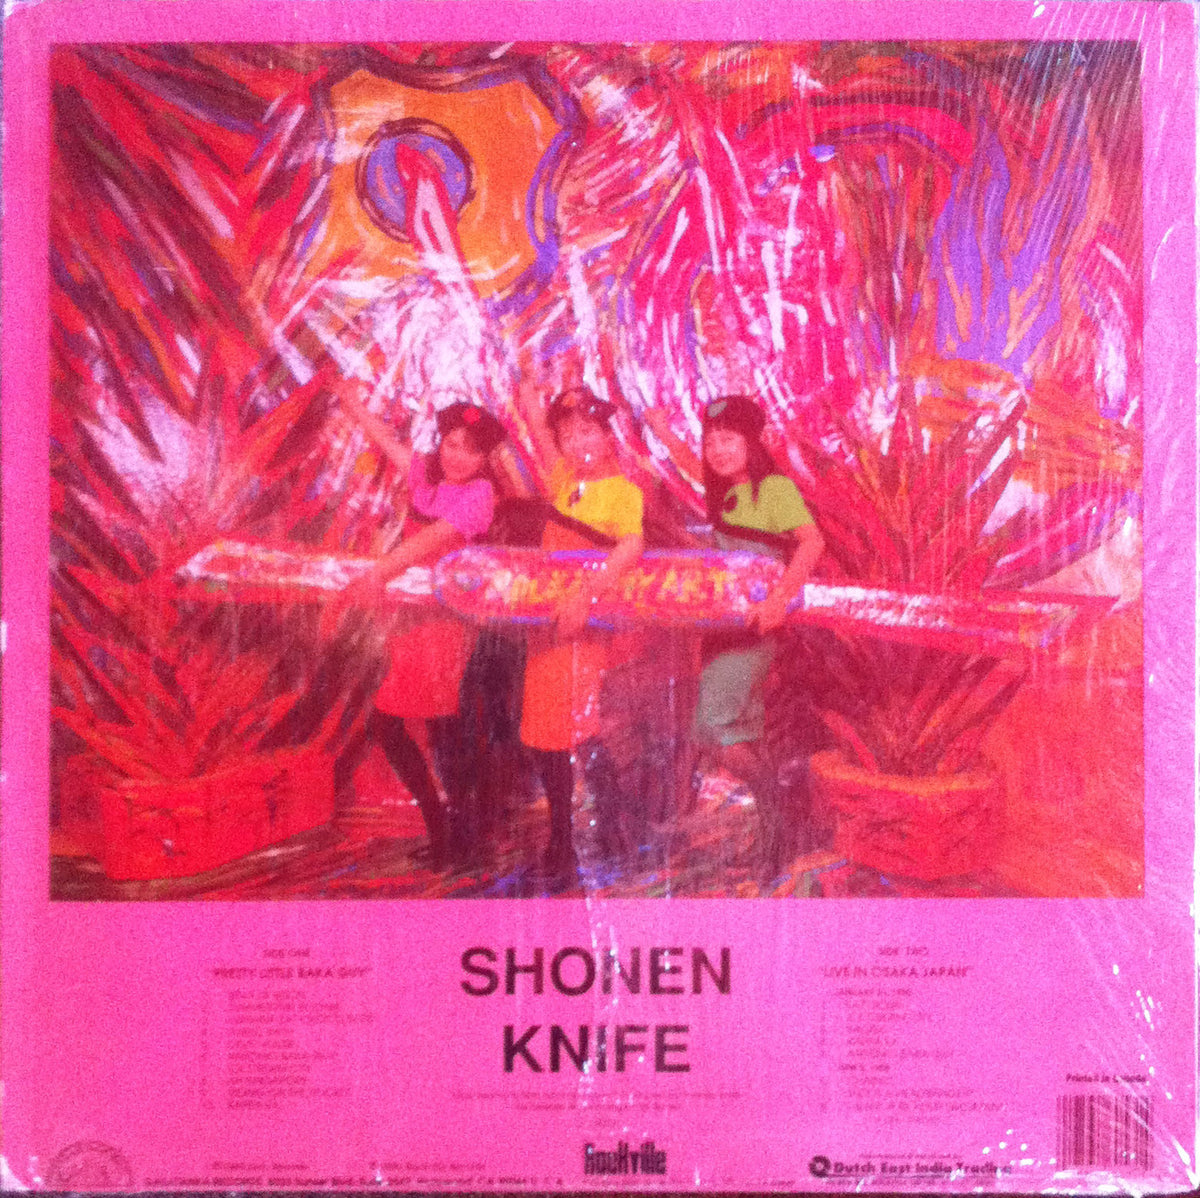 SHONEN KNIFE - Pretty Little Baka Guy + Live In Japan - 2